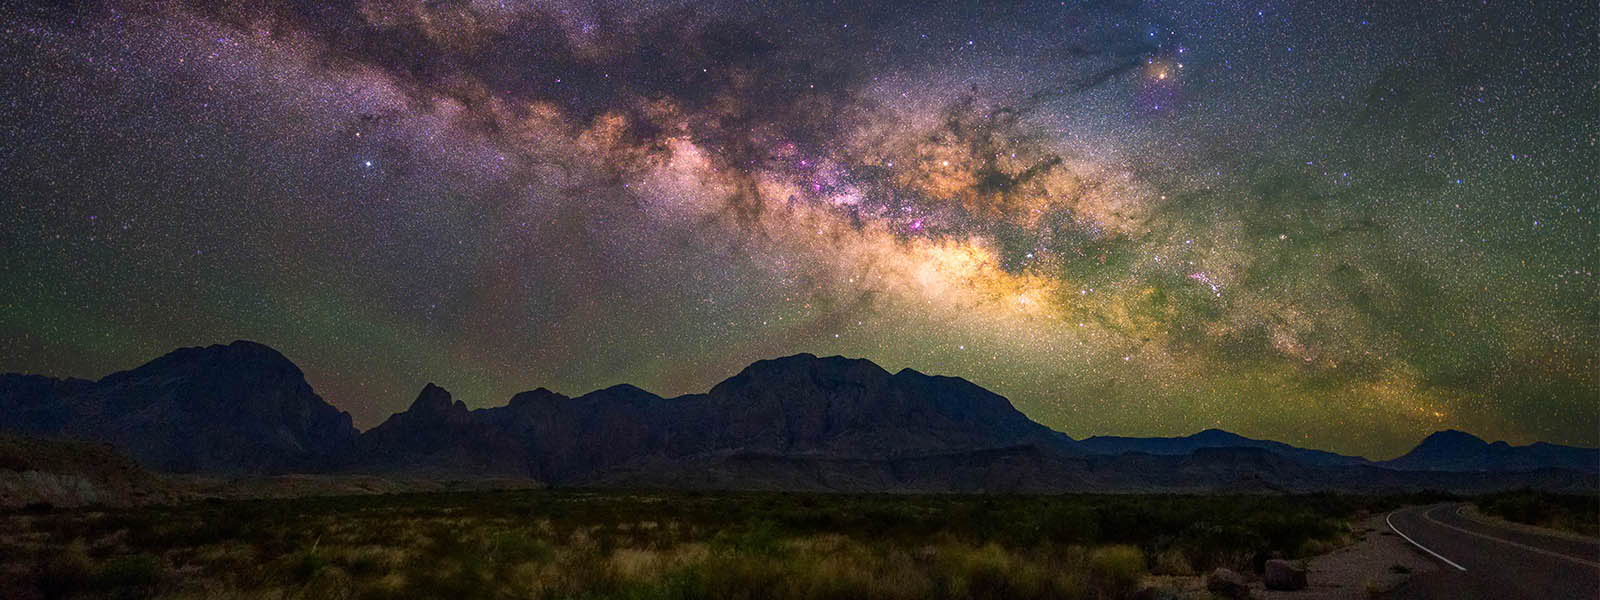 Stargazing in Texas